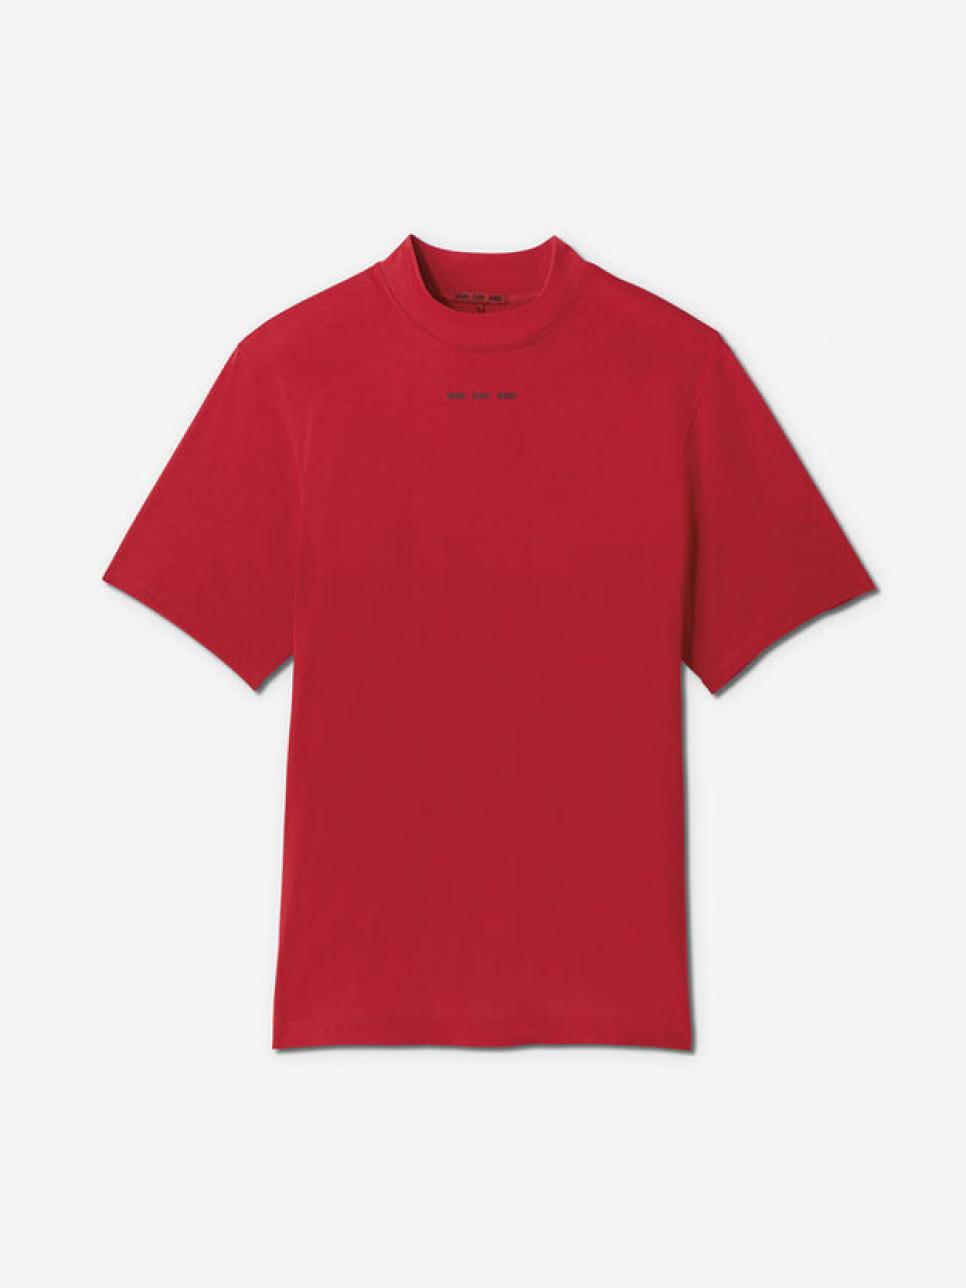 sun-day-red-mens-fermi-mock-golf-shirt.jpeg